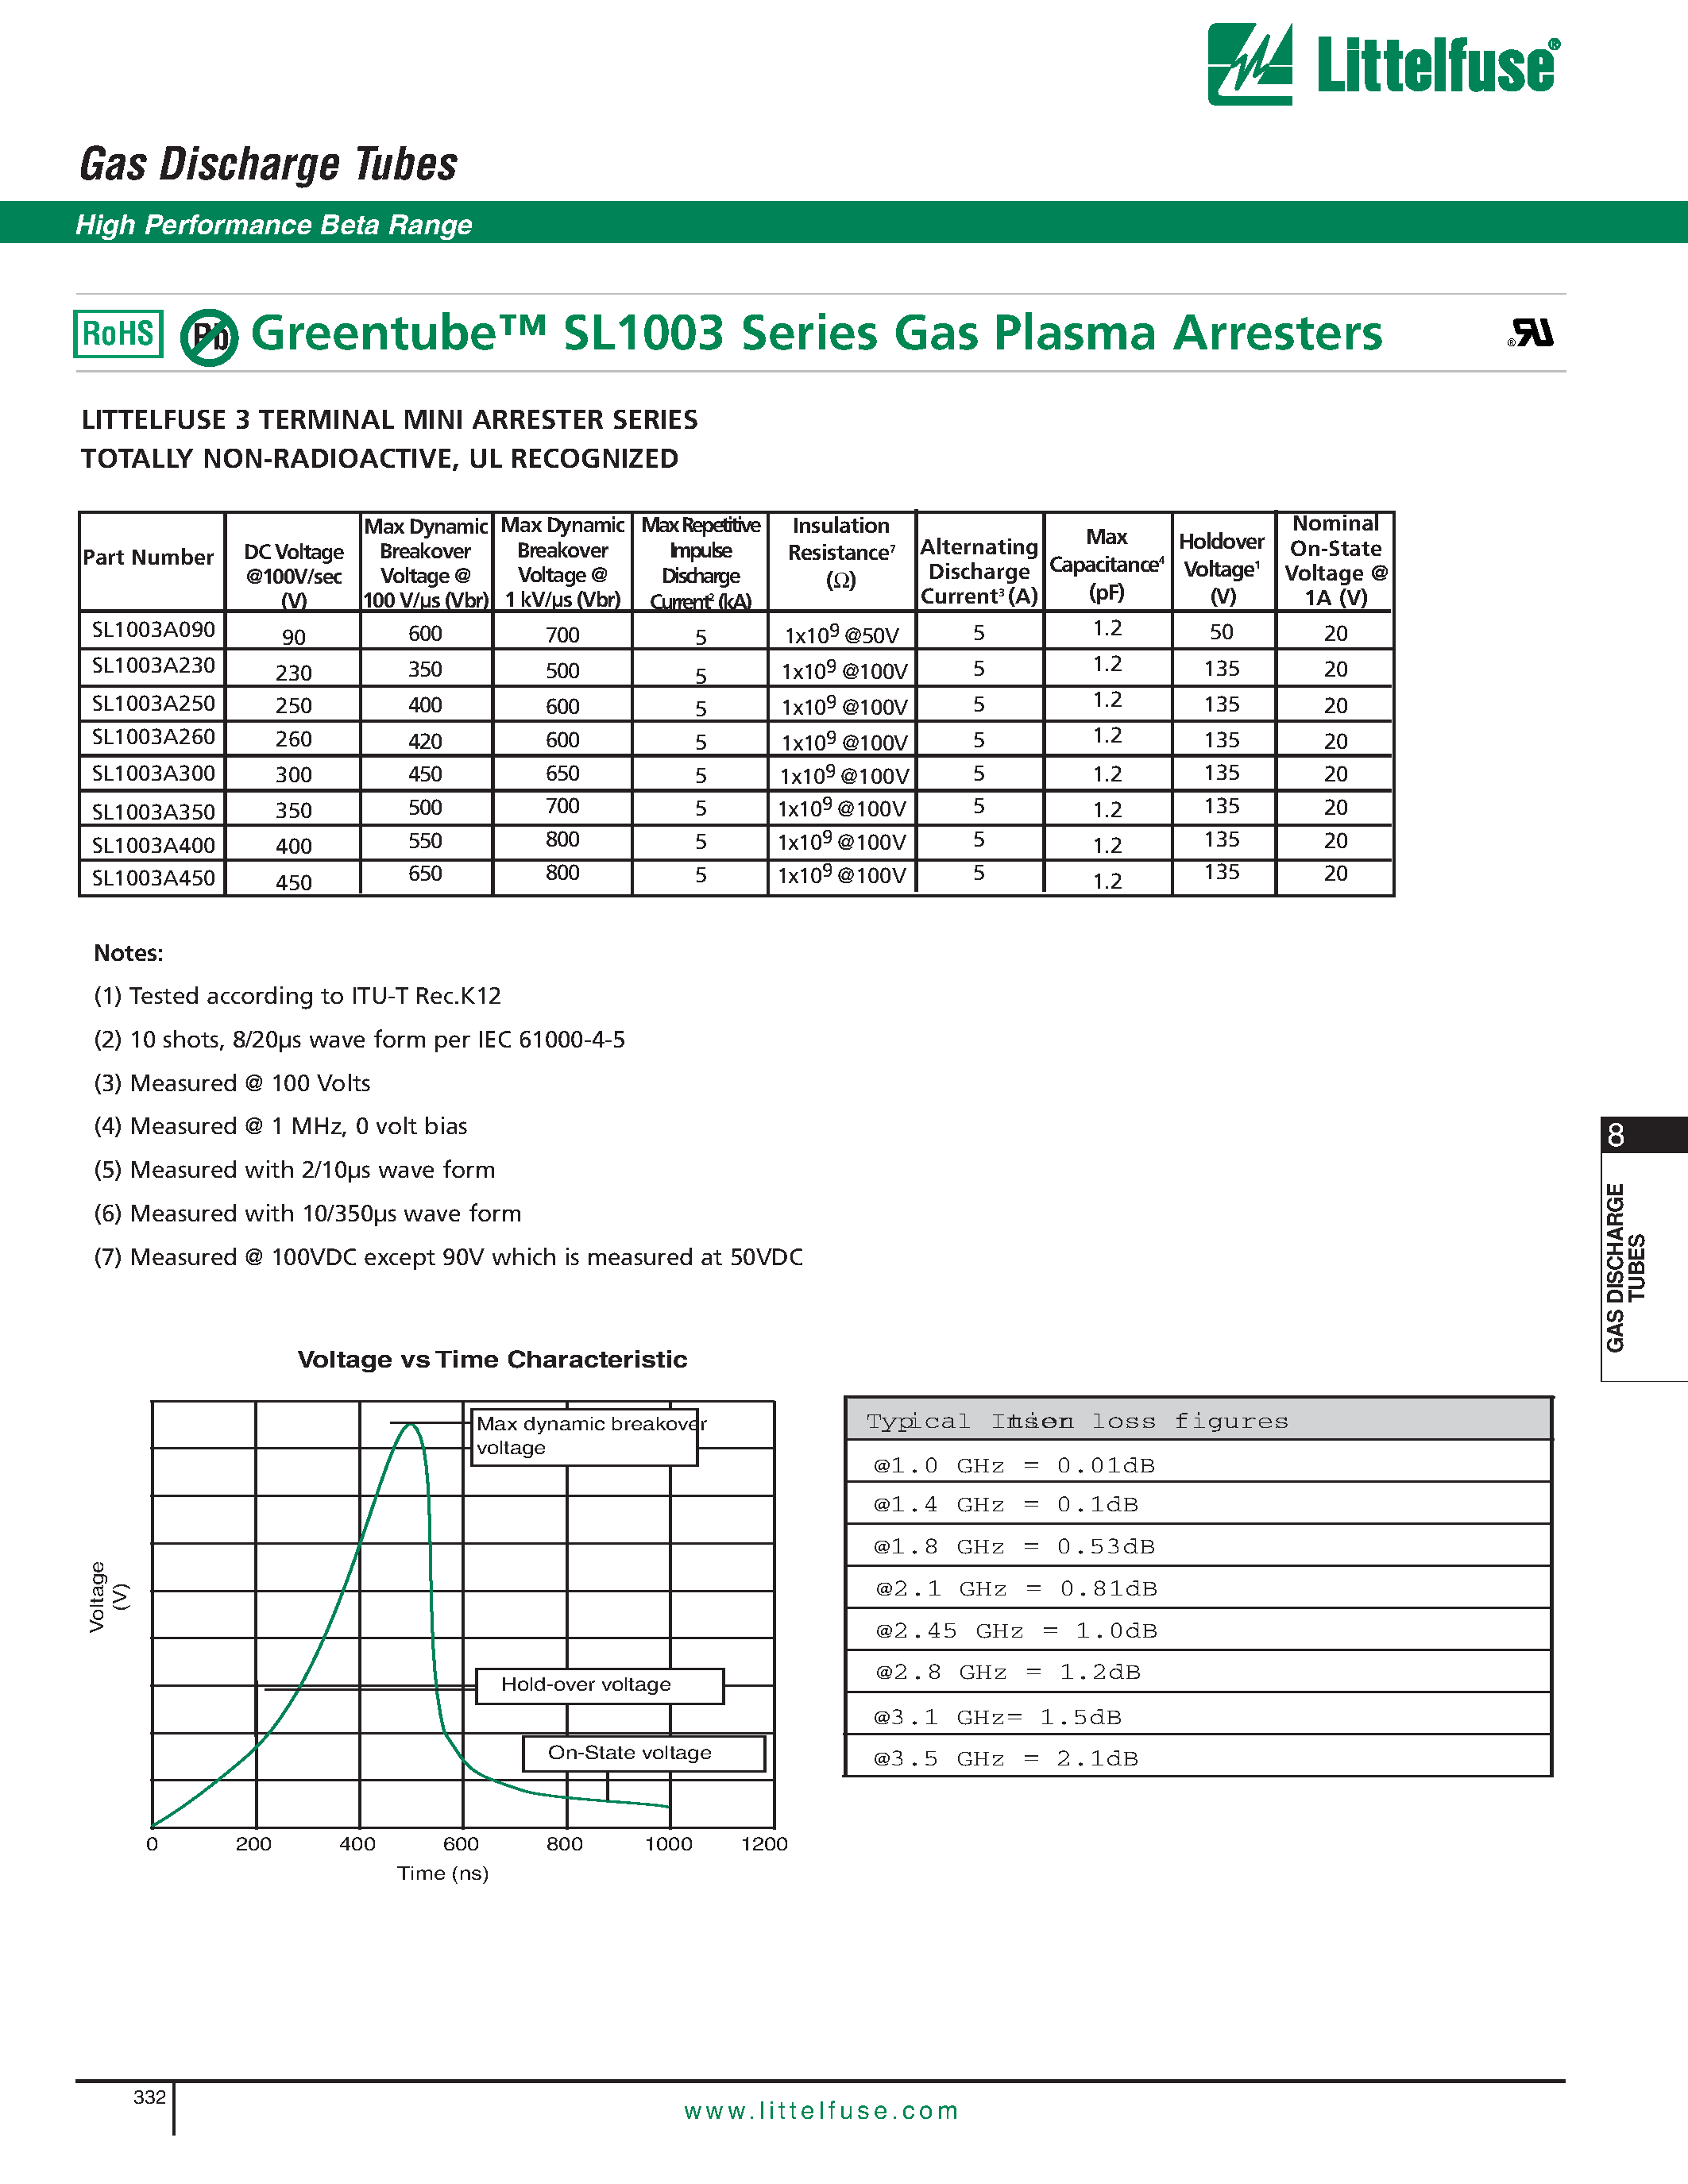 Даташит SL1003A250 - Greentube SL1003 Series Gas Plasma Arresters страница 2